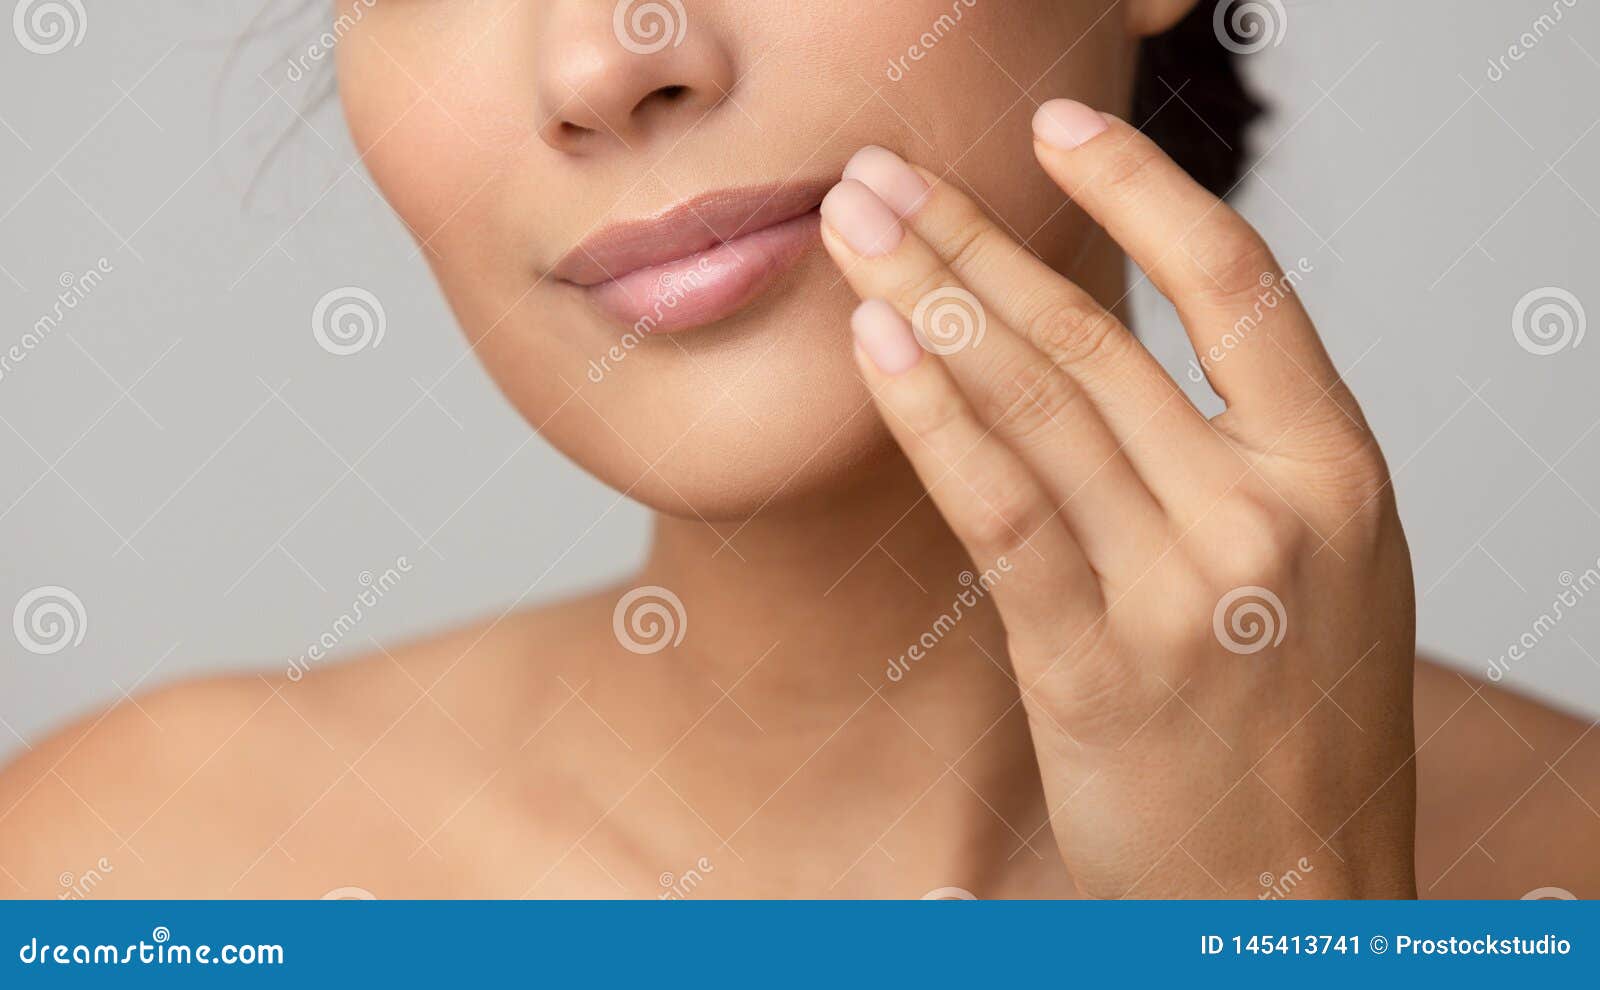 woman applying lip balm over grey background